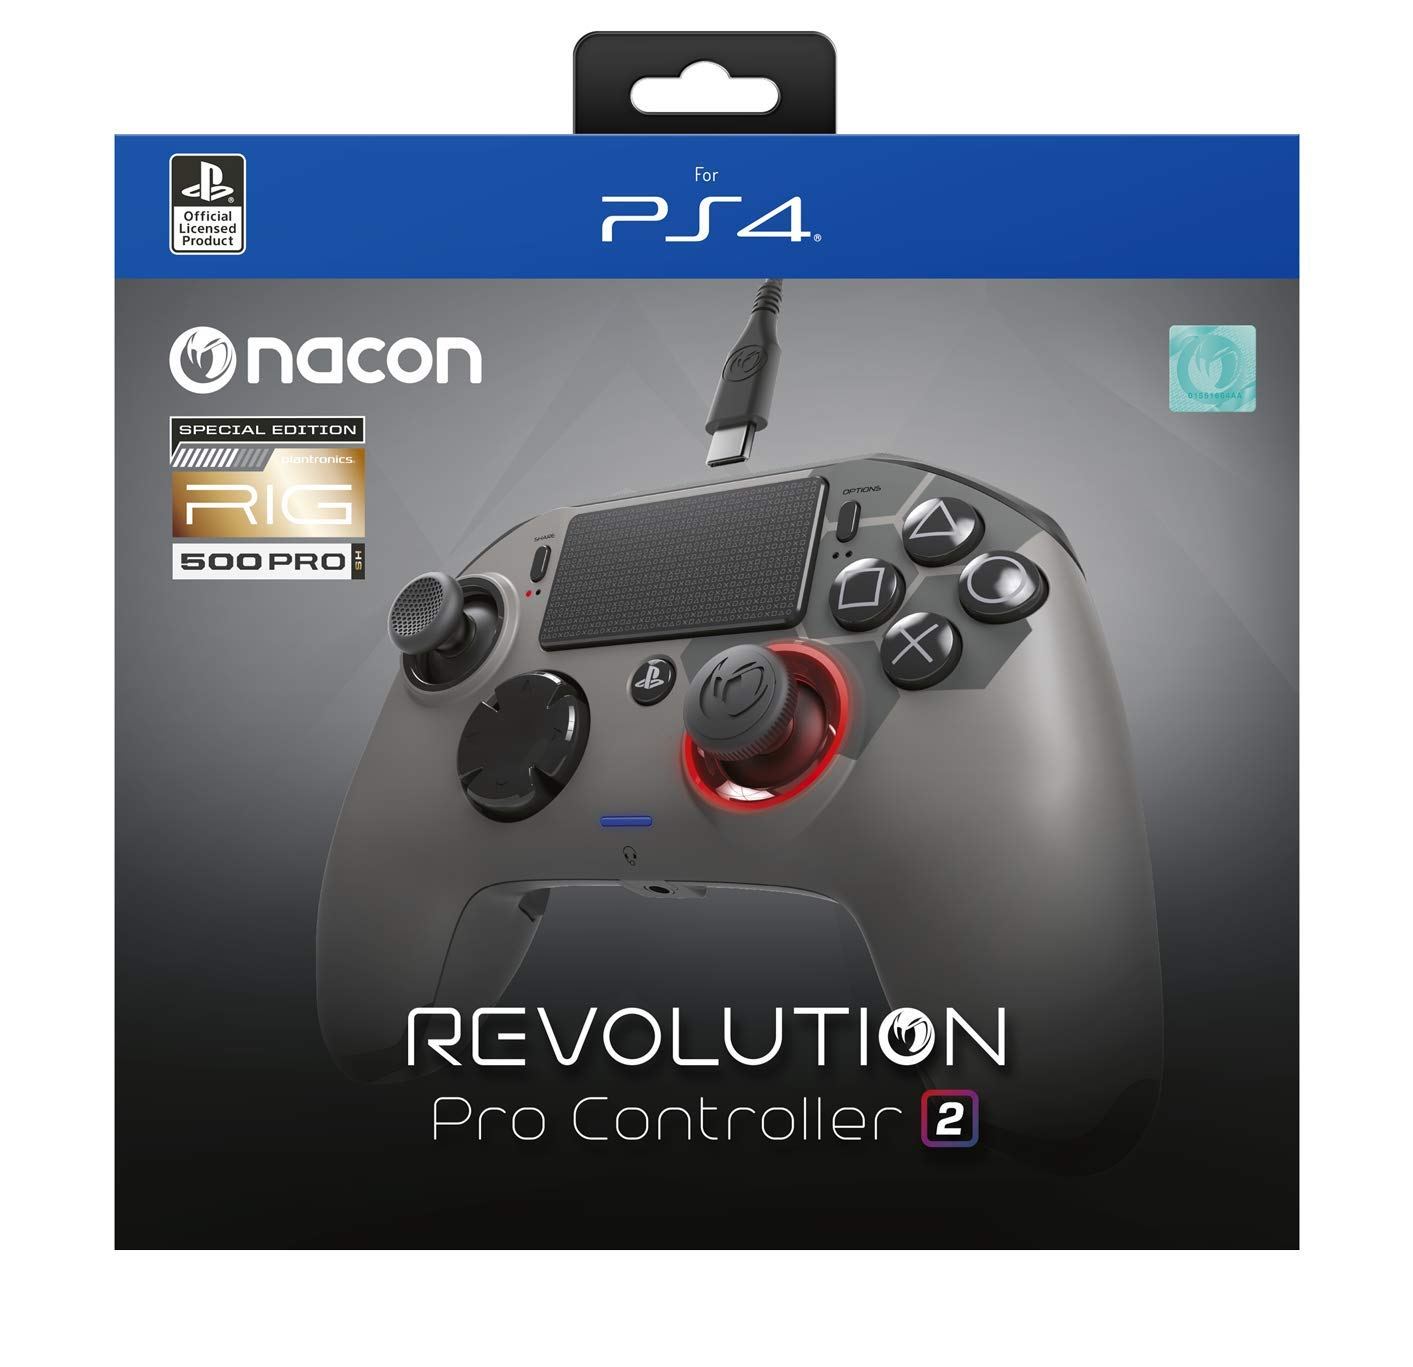 Nacon Revolution Pro Controller 2 for PlayStation 4 (Rig Limited 